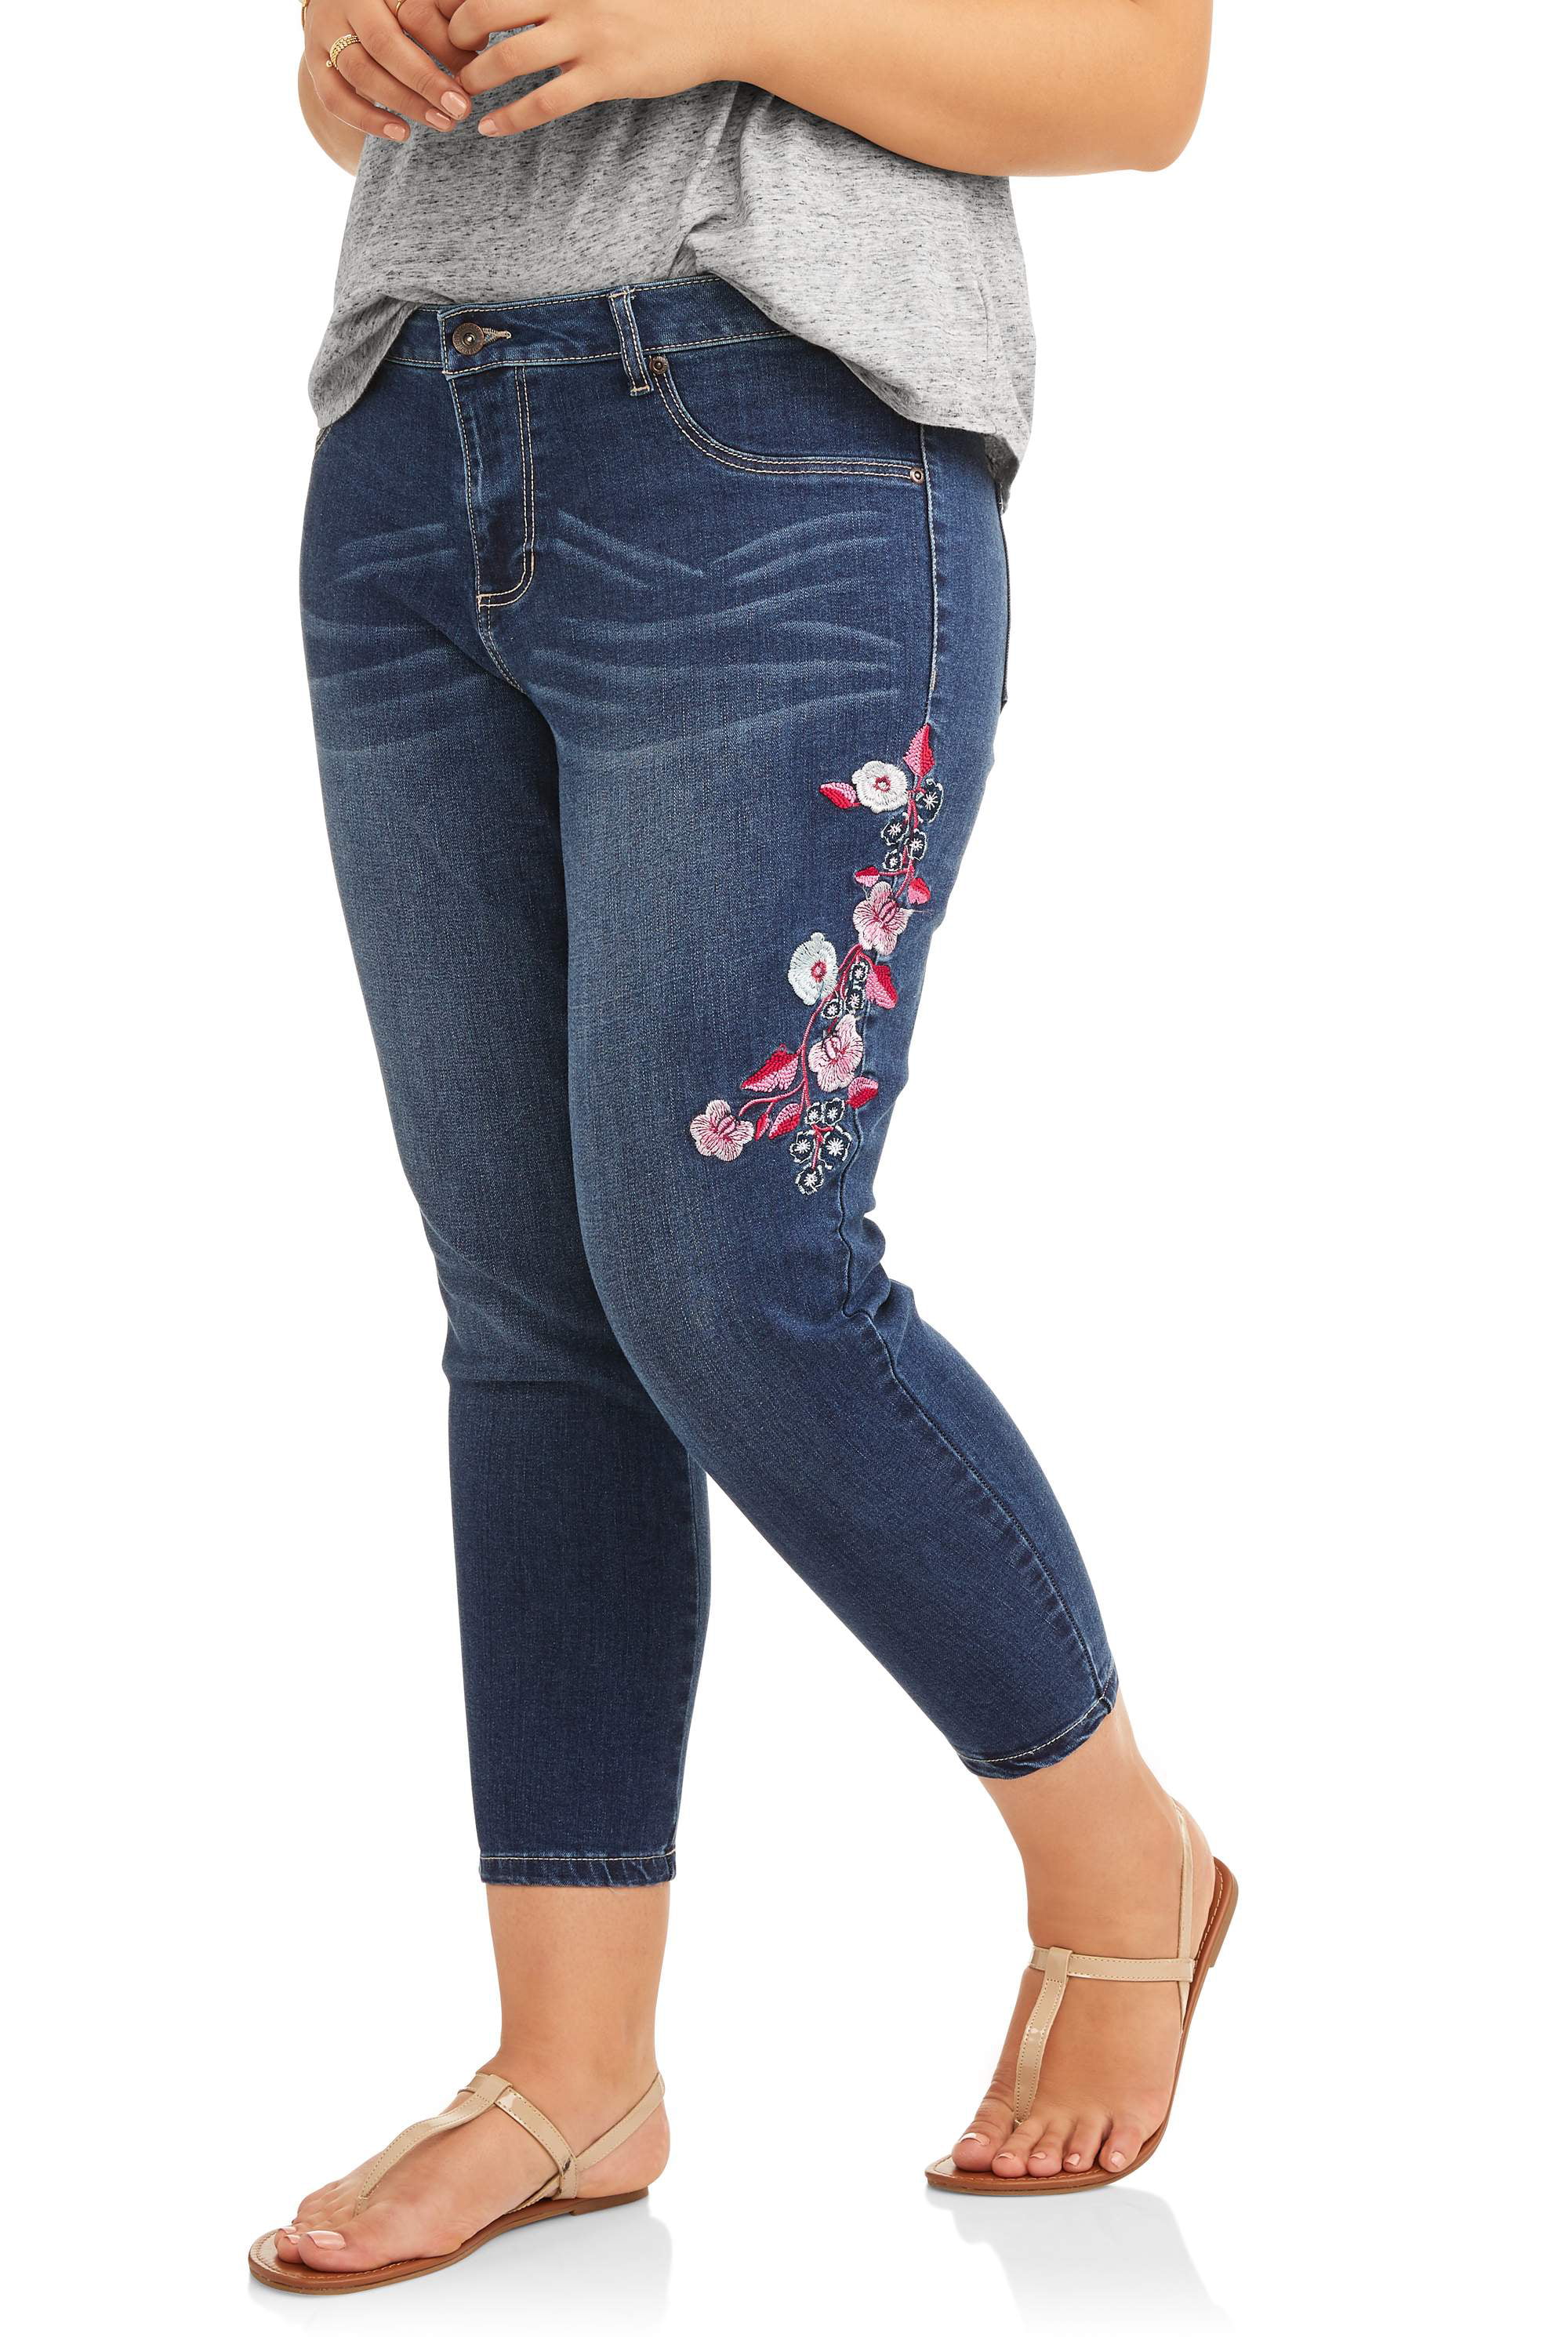 women's capris jeans walmart